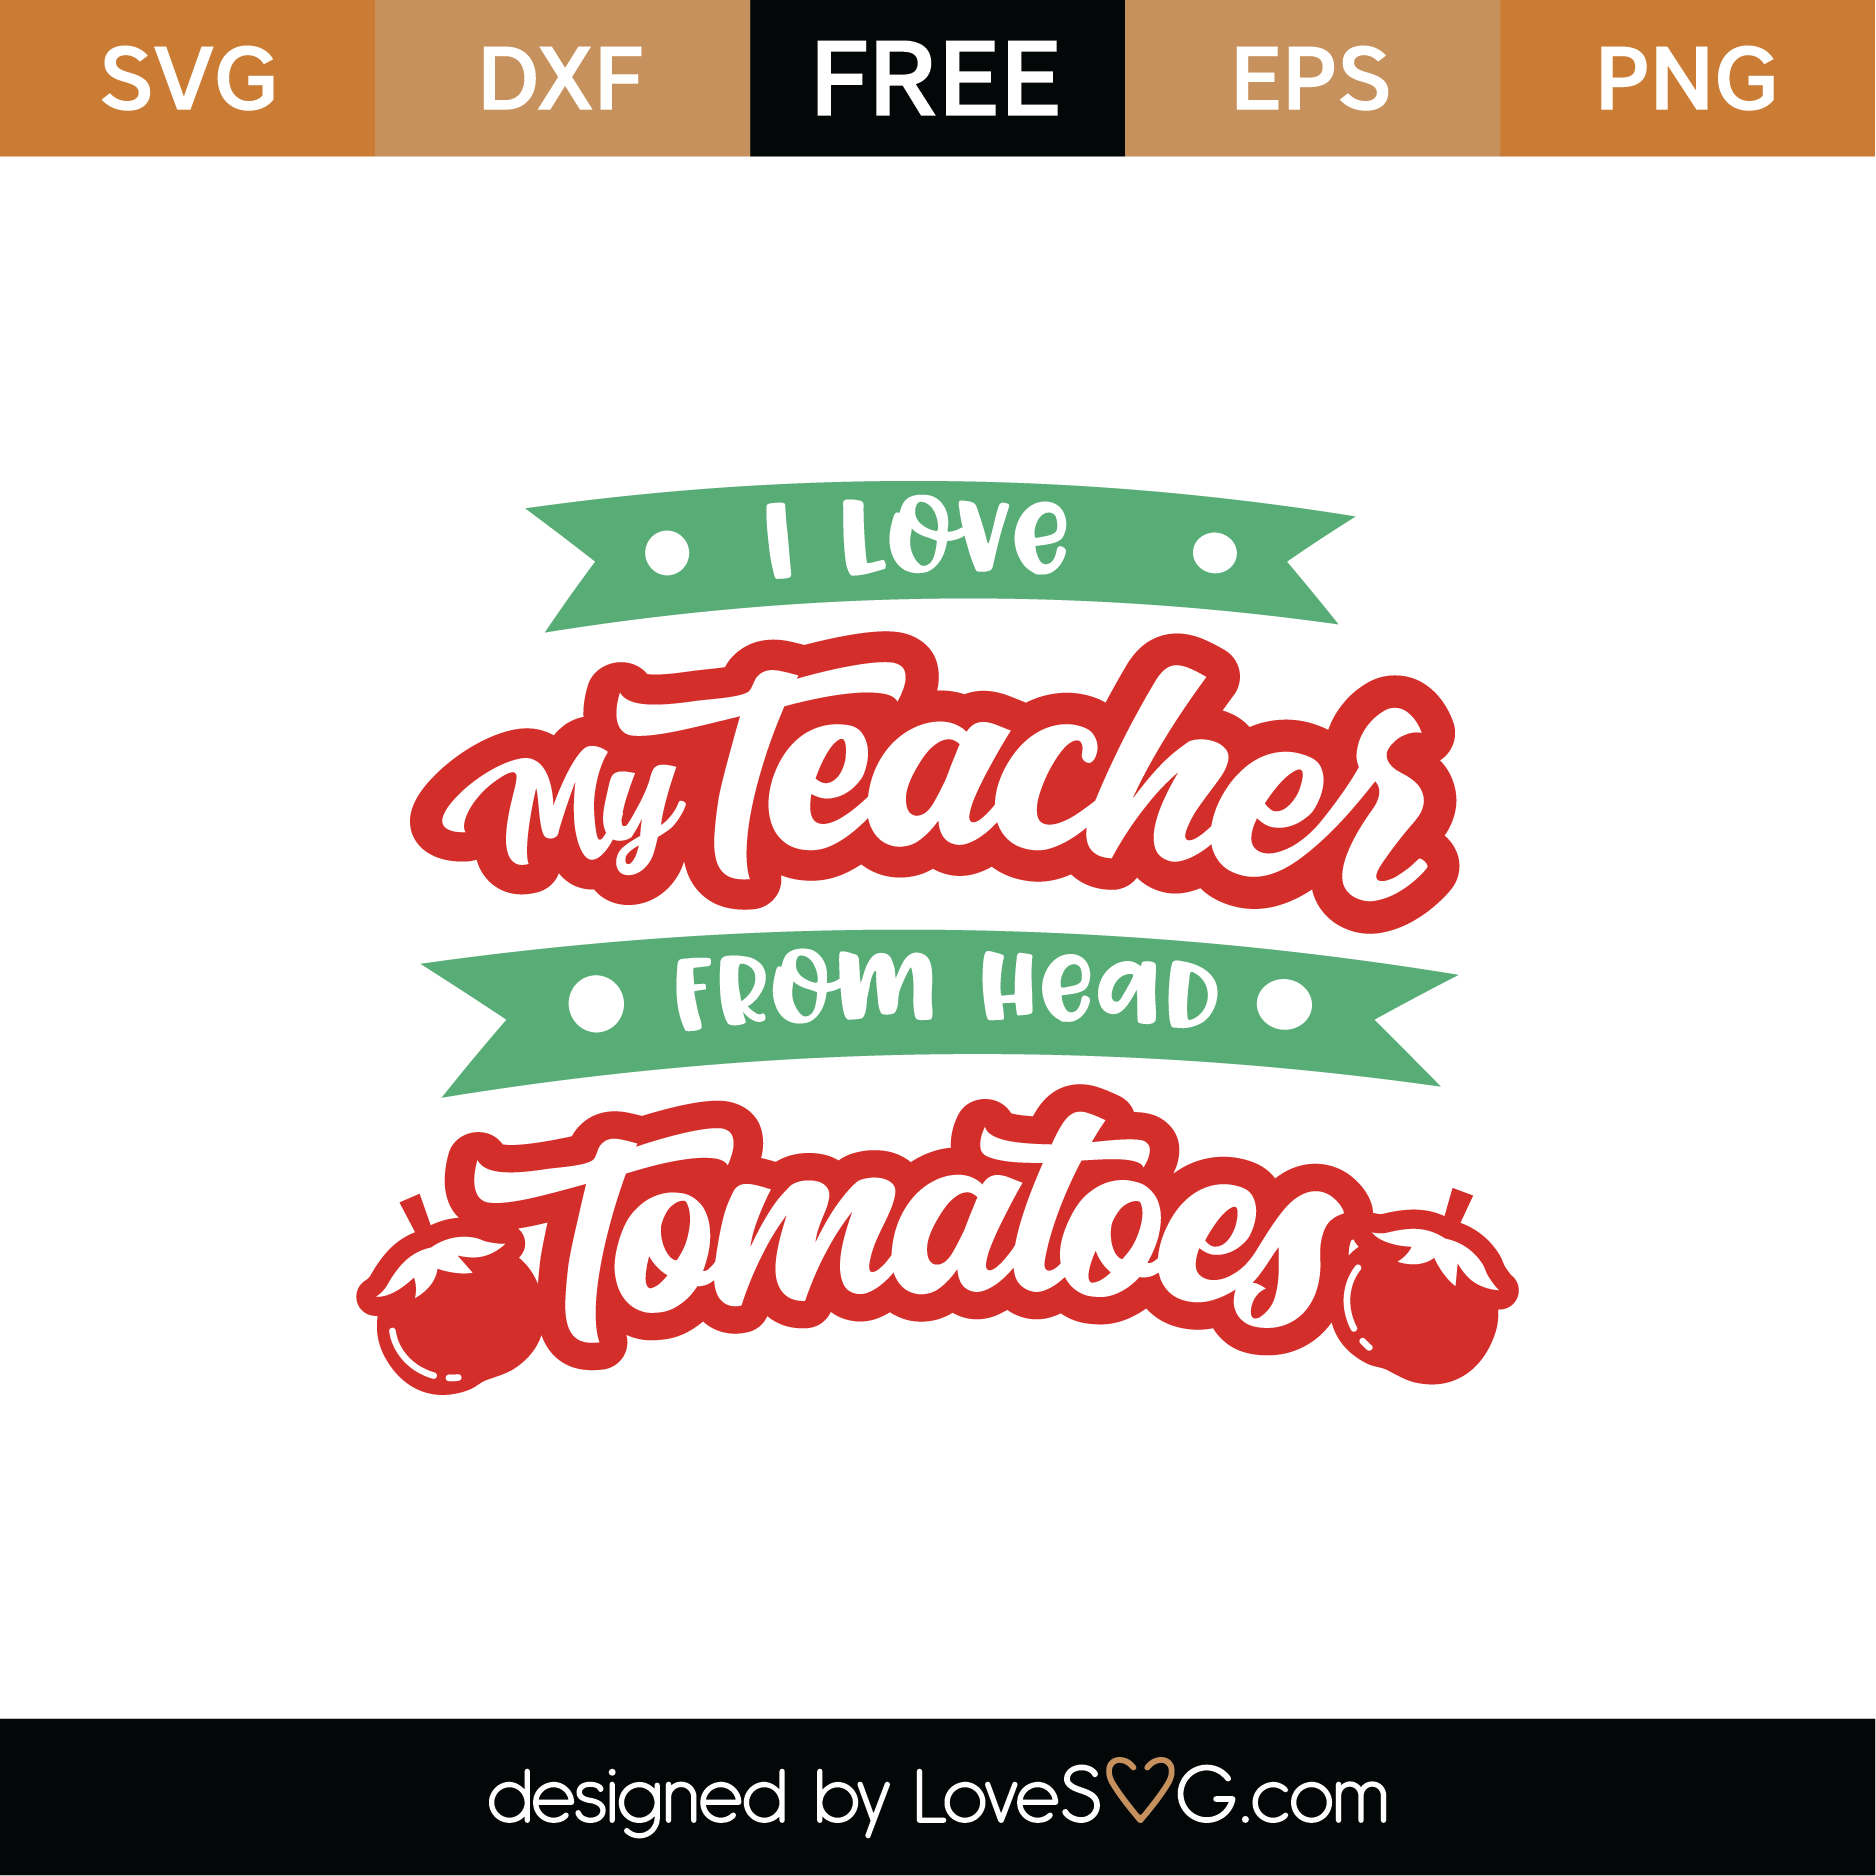 Free Free 190 Love Teacher Svg Free SVG PNG EPS DXF File